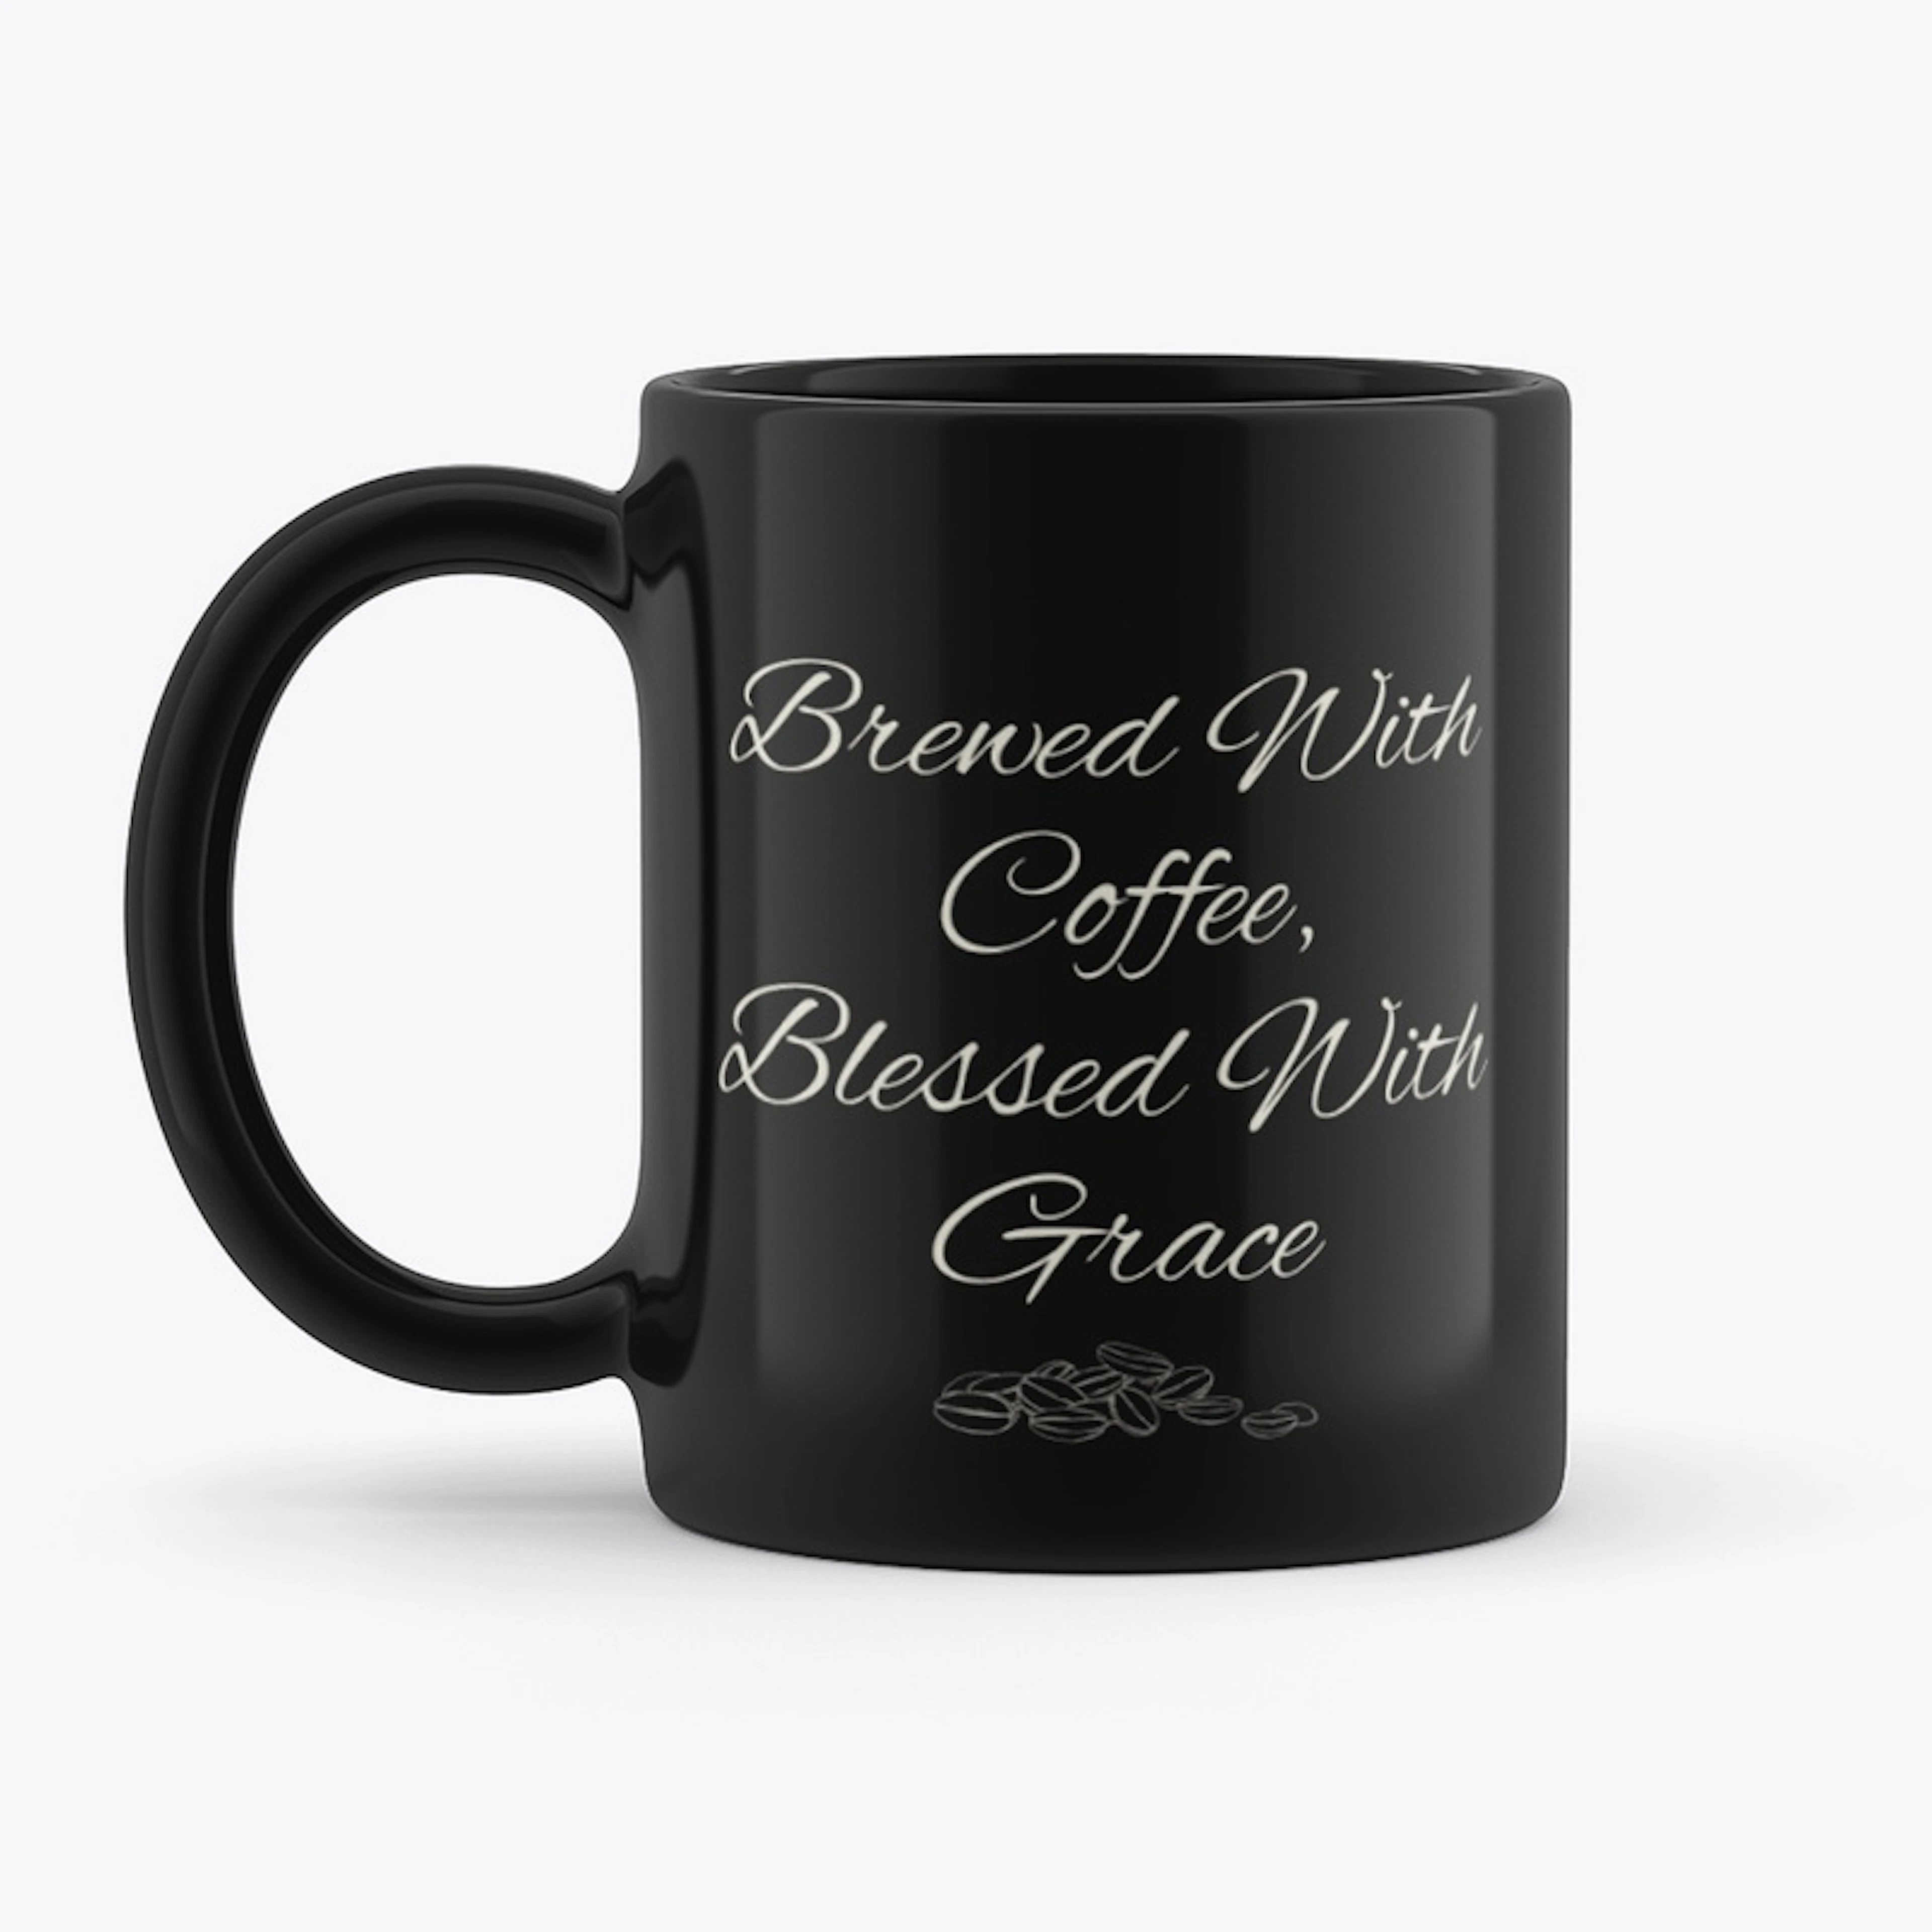 Coffee and Grace - Mug